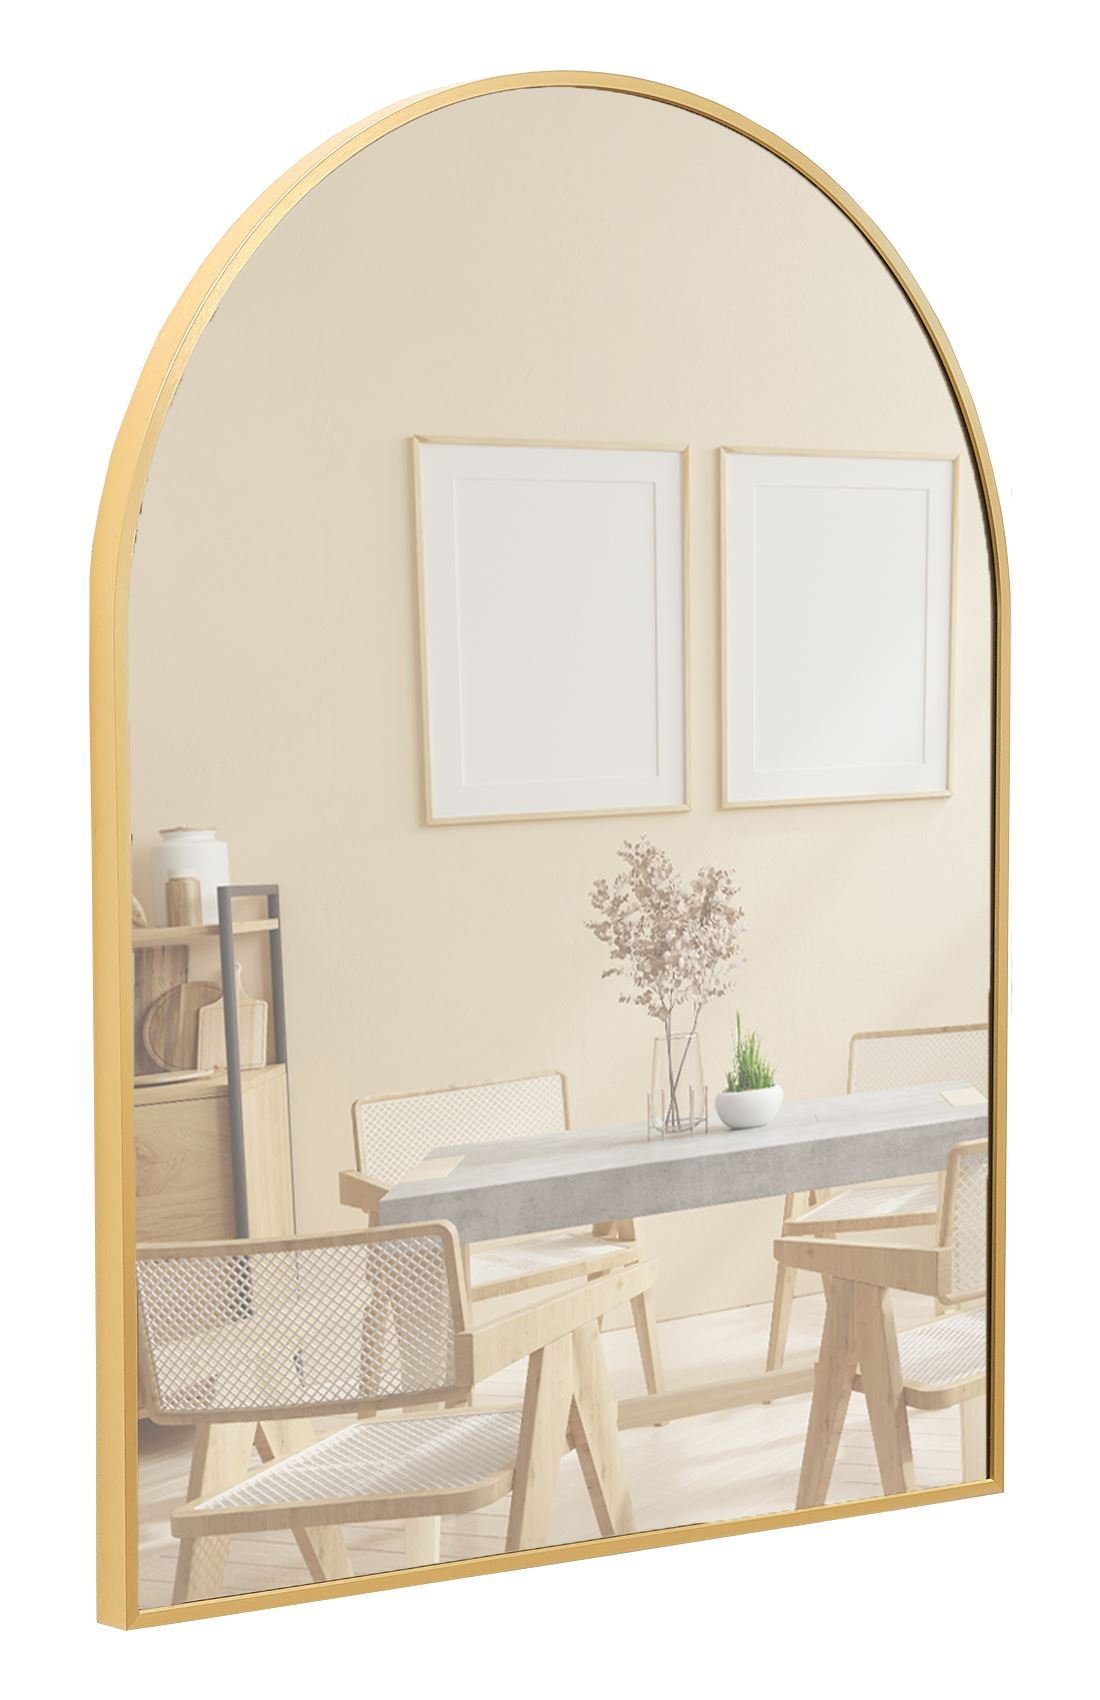 Terra Home Bogenform, Flurspiegel gold Badezimmerspiegel gold Metallrahmen 60x80 gold Spiegel | Wandspiegel